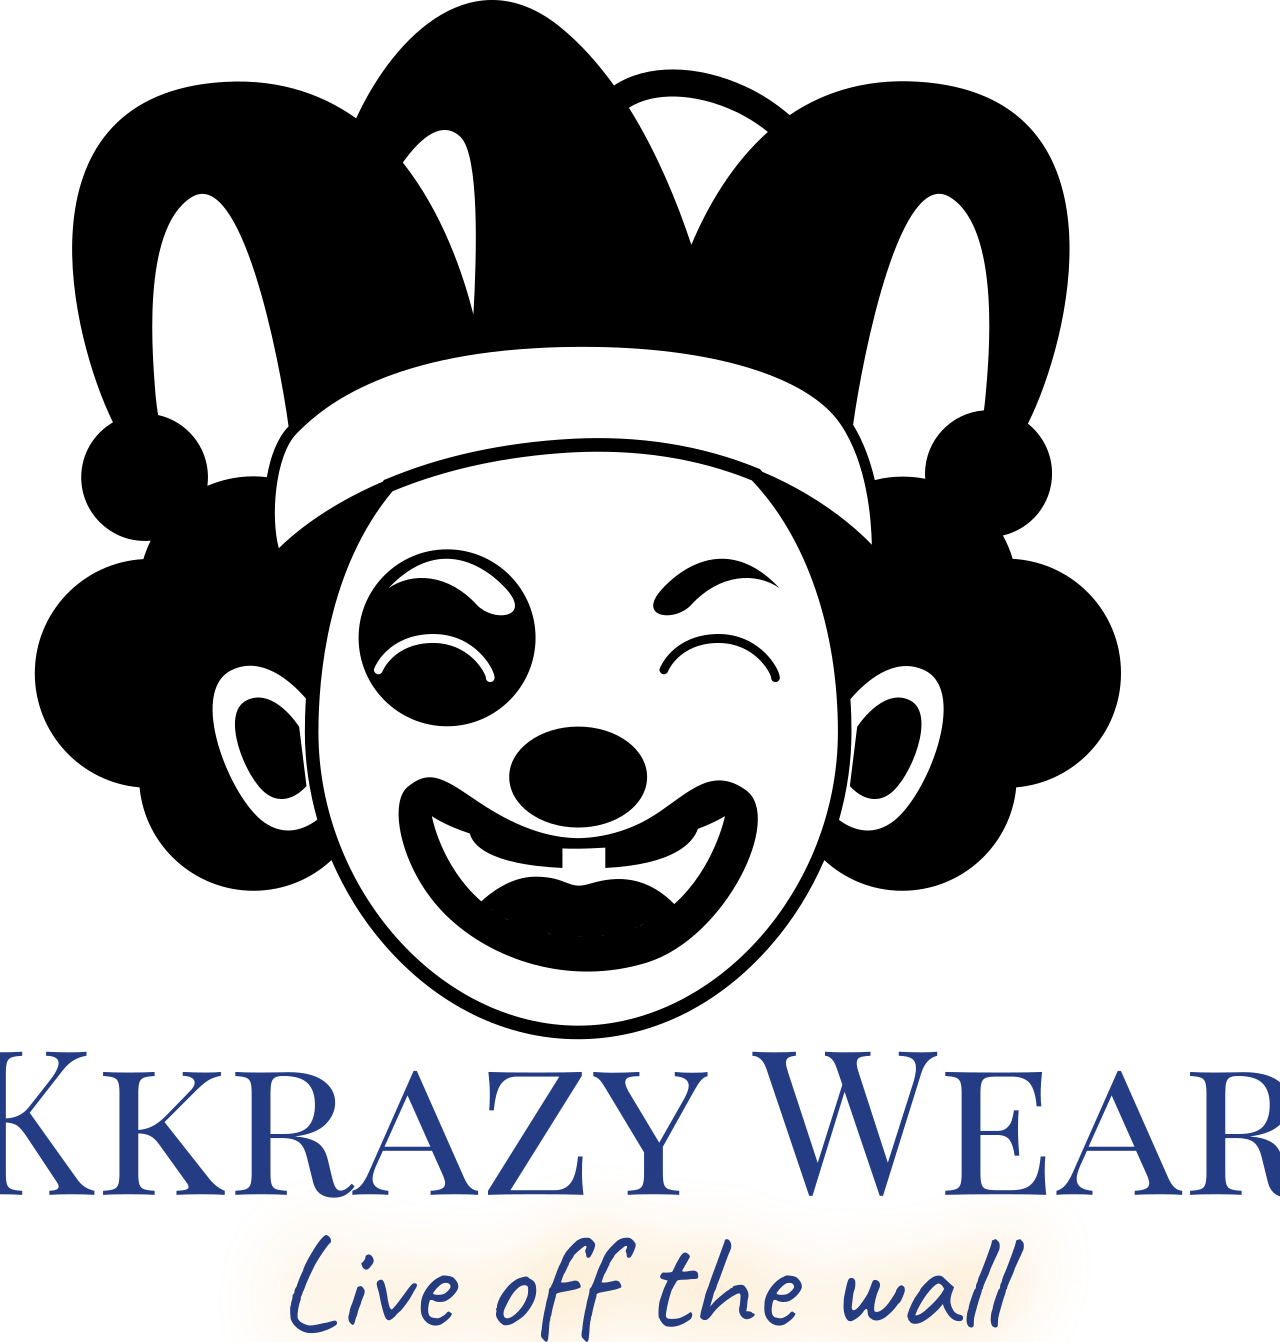 Kkrazy Wear's logo